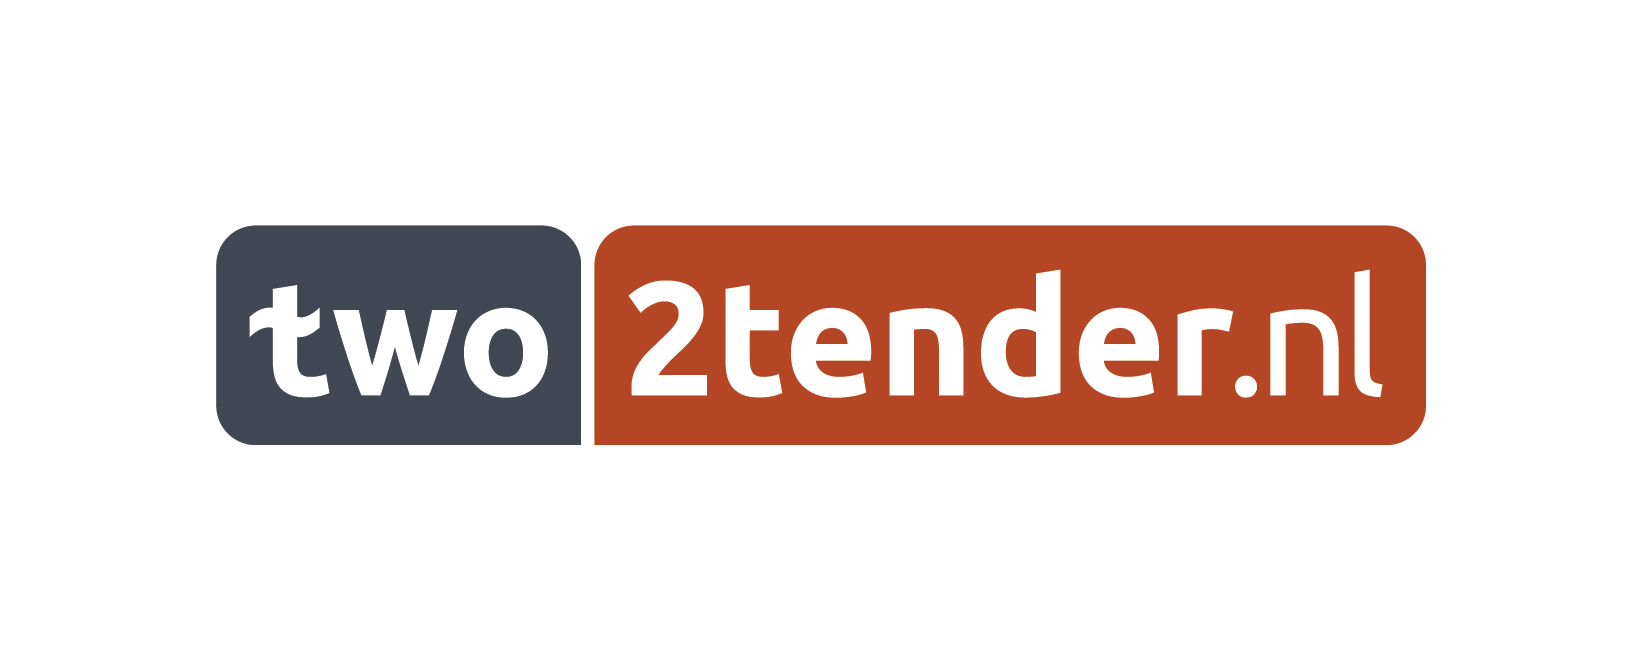 Two 2 Tender